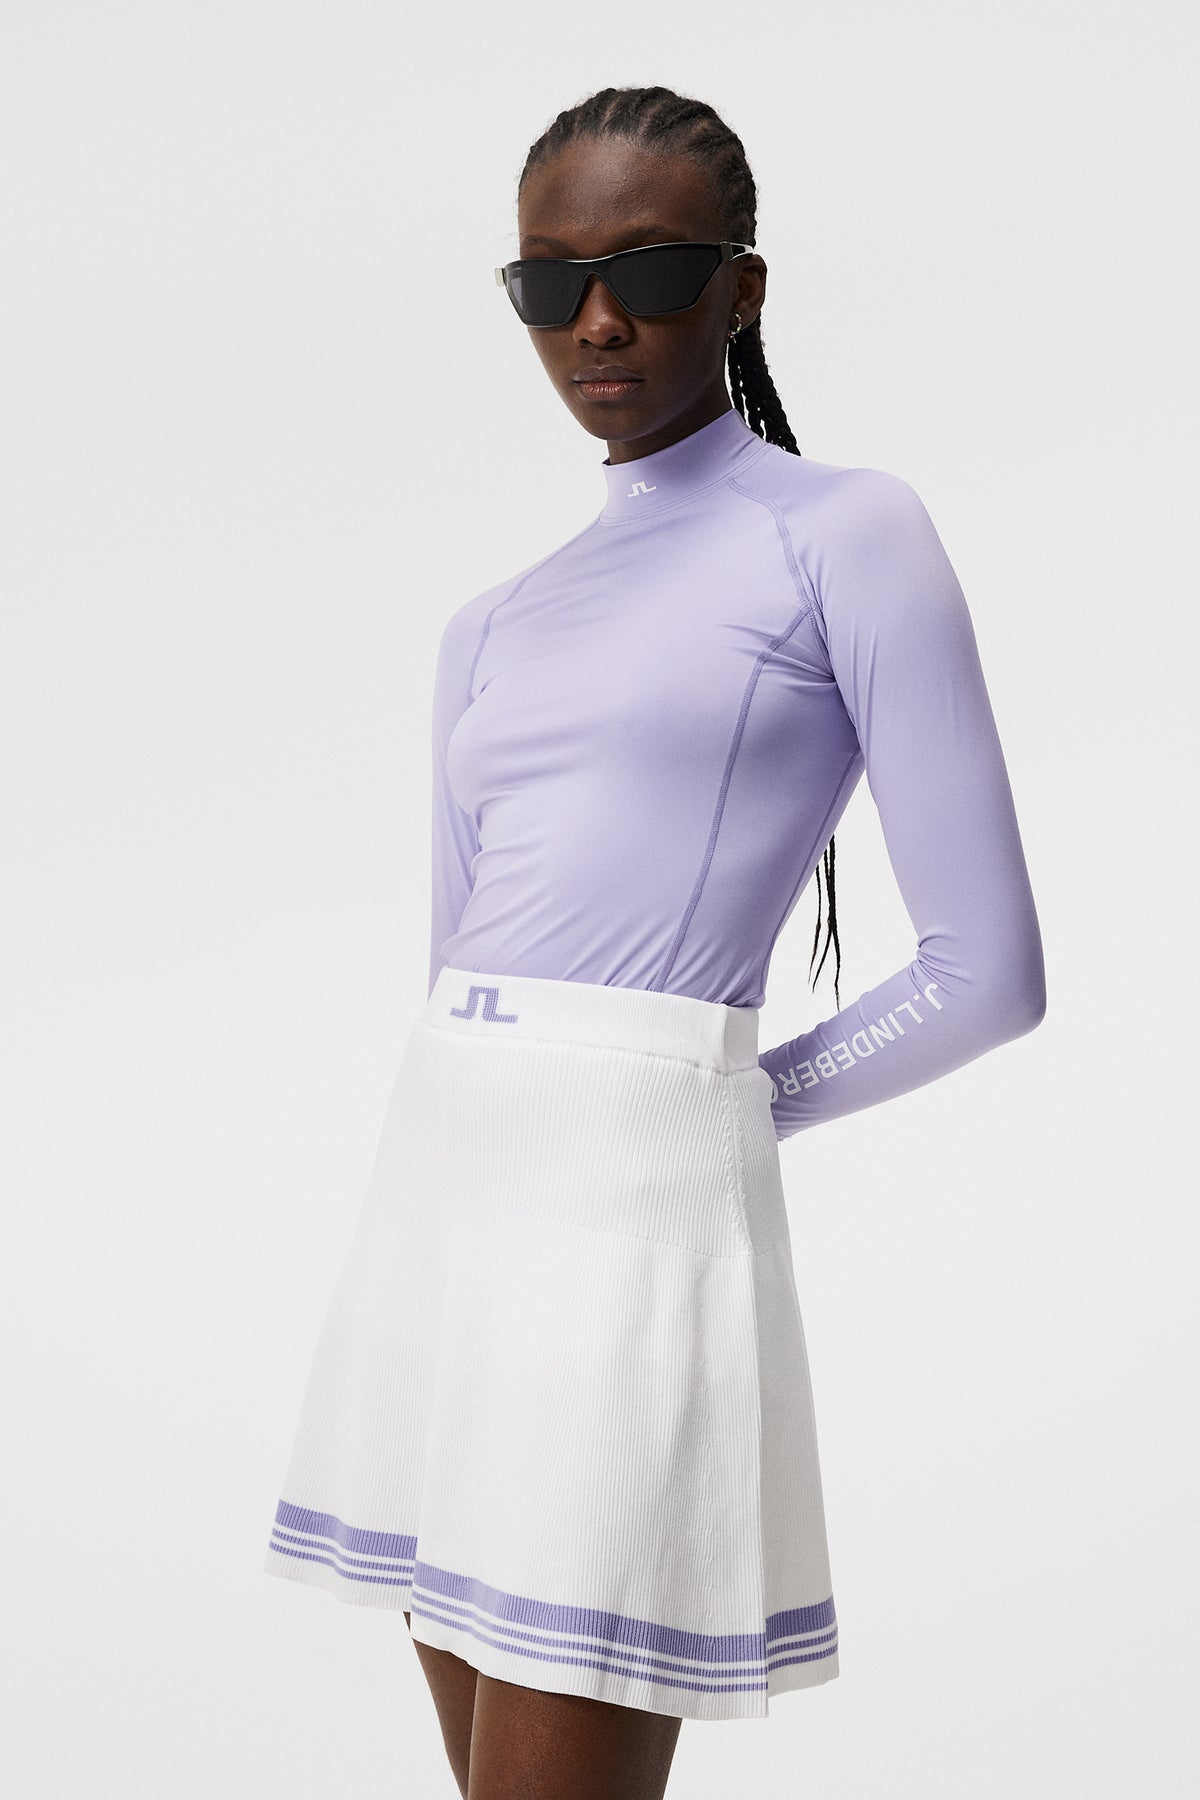 Fdx Monarch Women's Base Layer Compression Shirt Purple